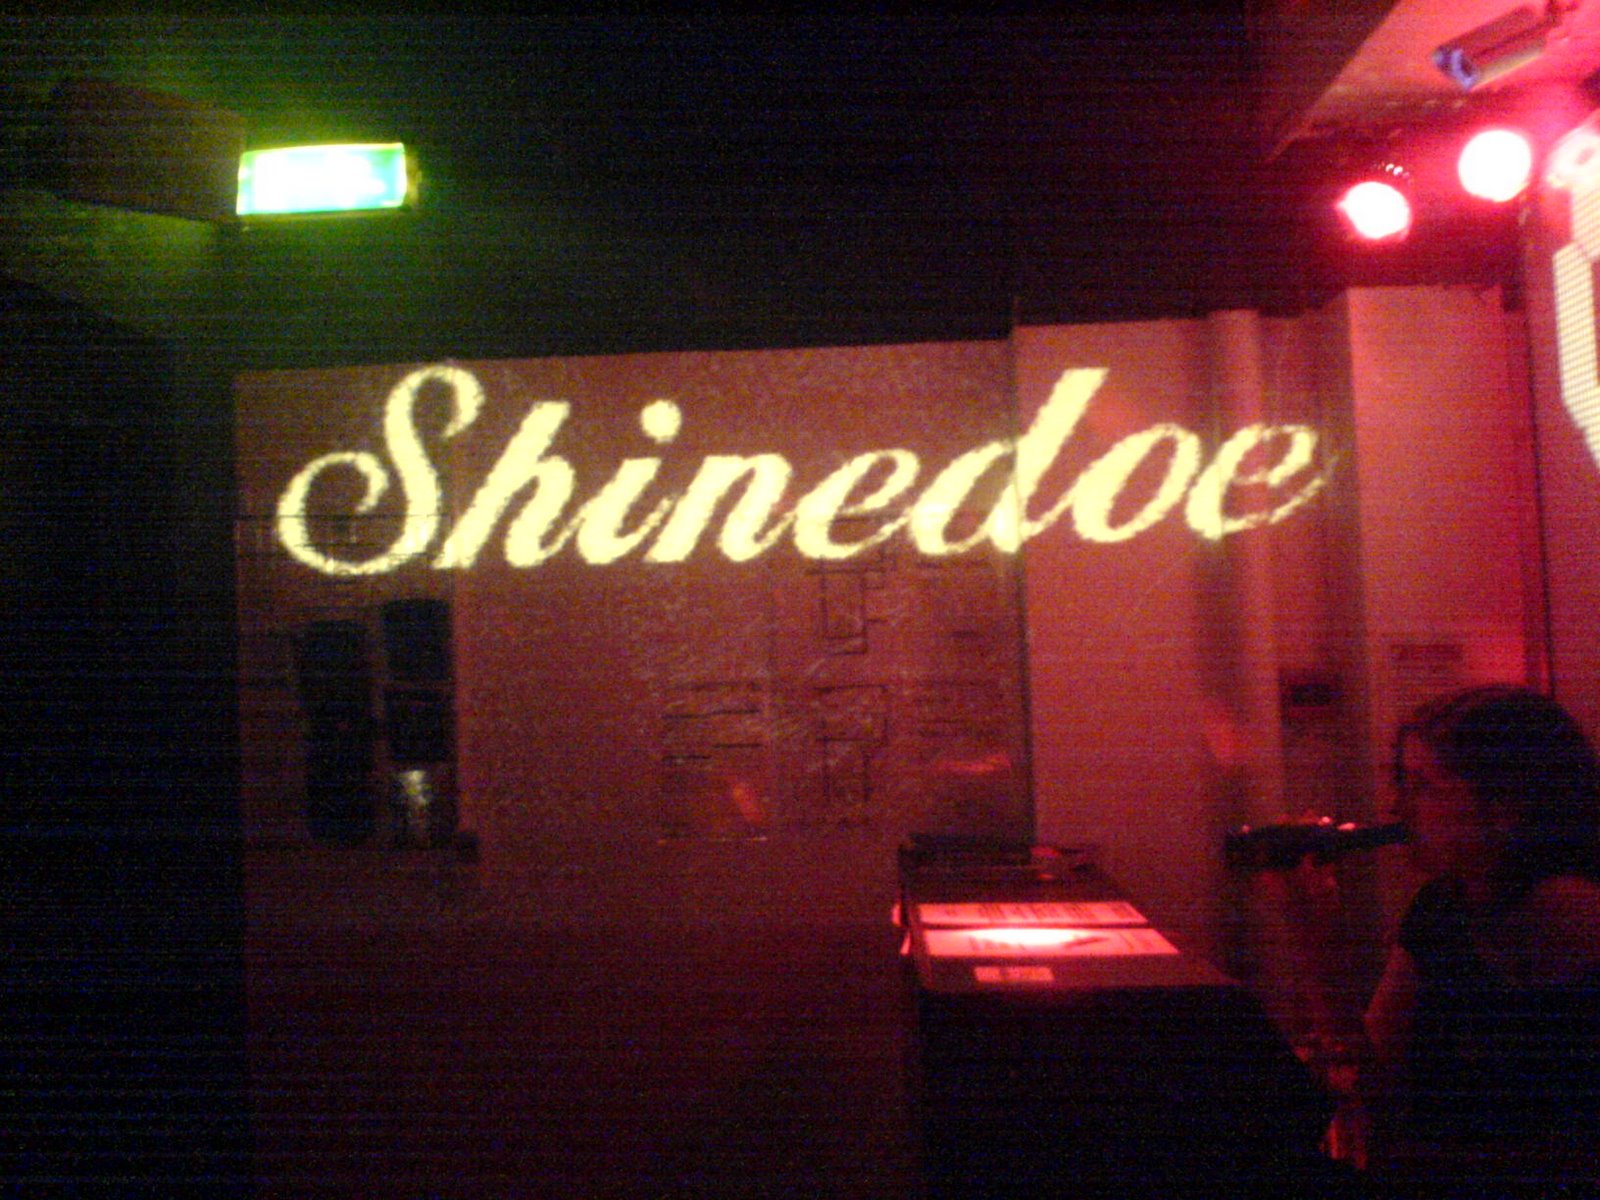 [shinedoe.JPG]